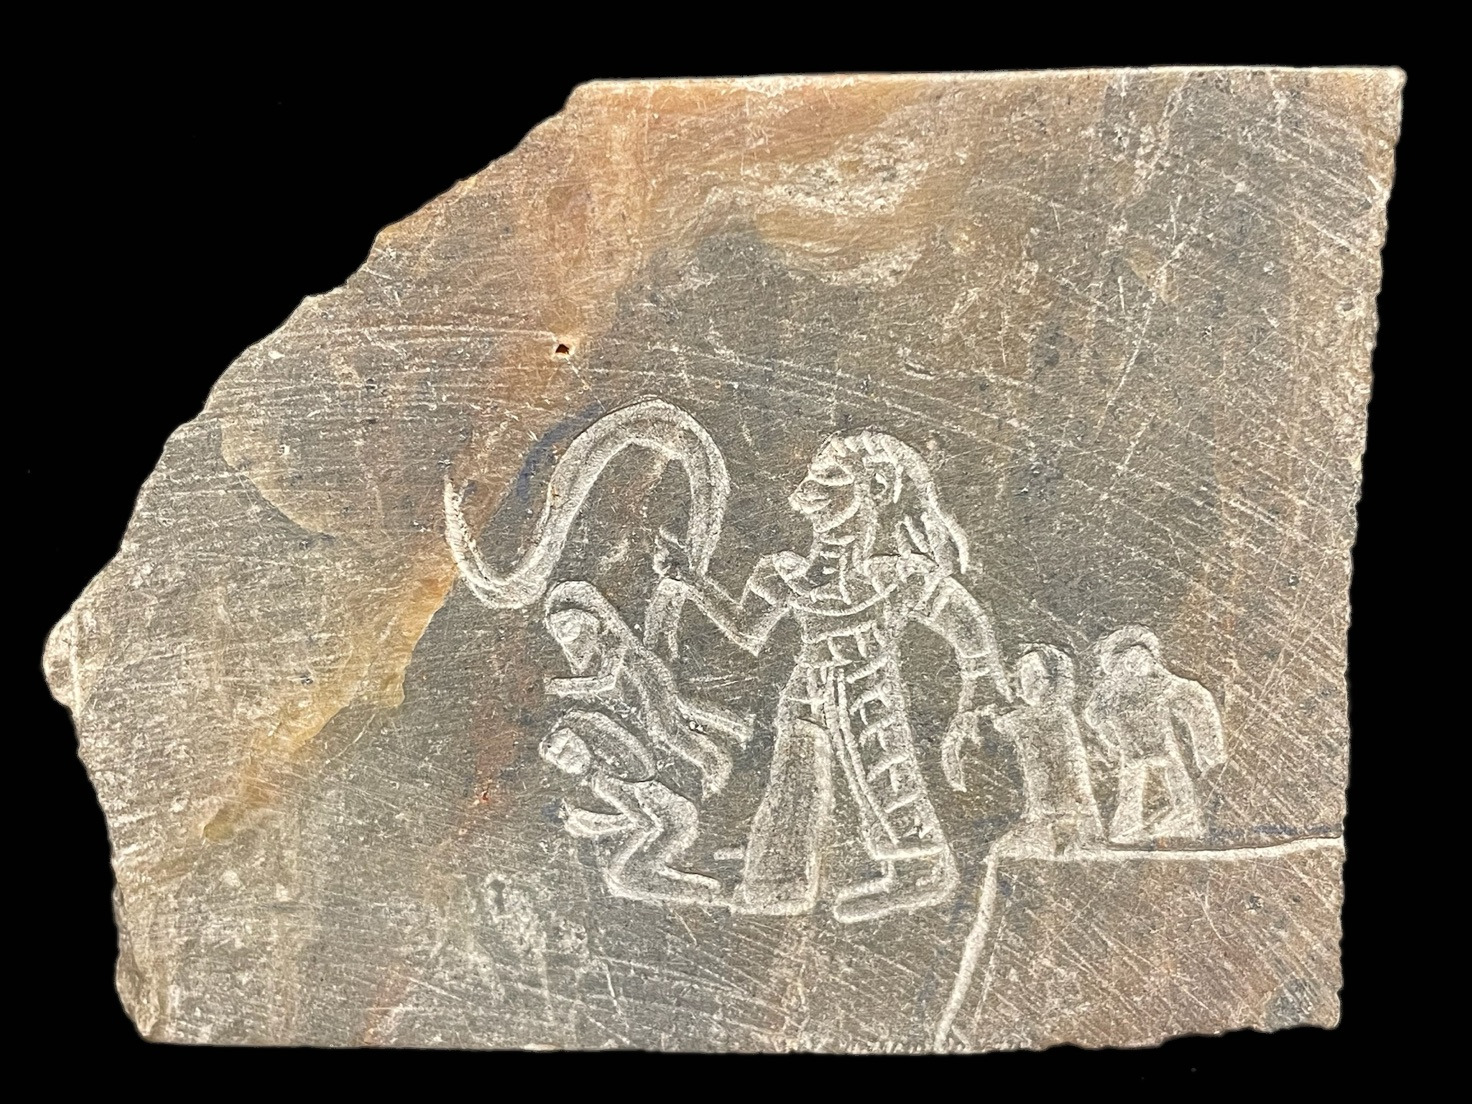 CIRCA NEAR EASTERN ASSYRIAN STONE PLAQUE DEPICTING A HUNTER  2500BC